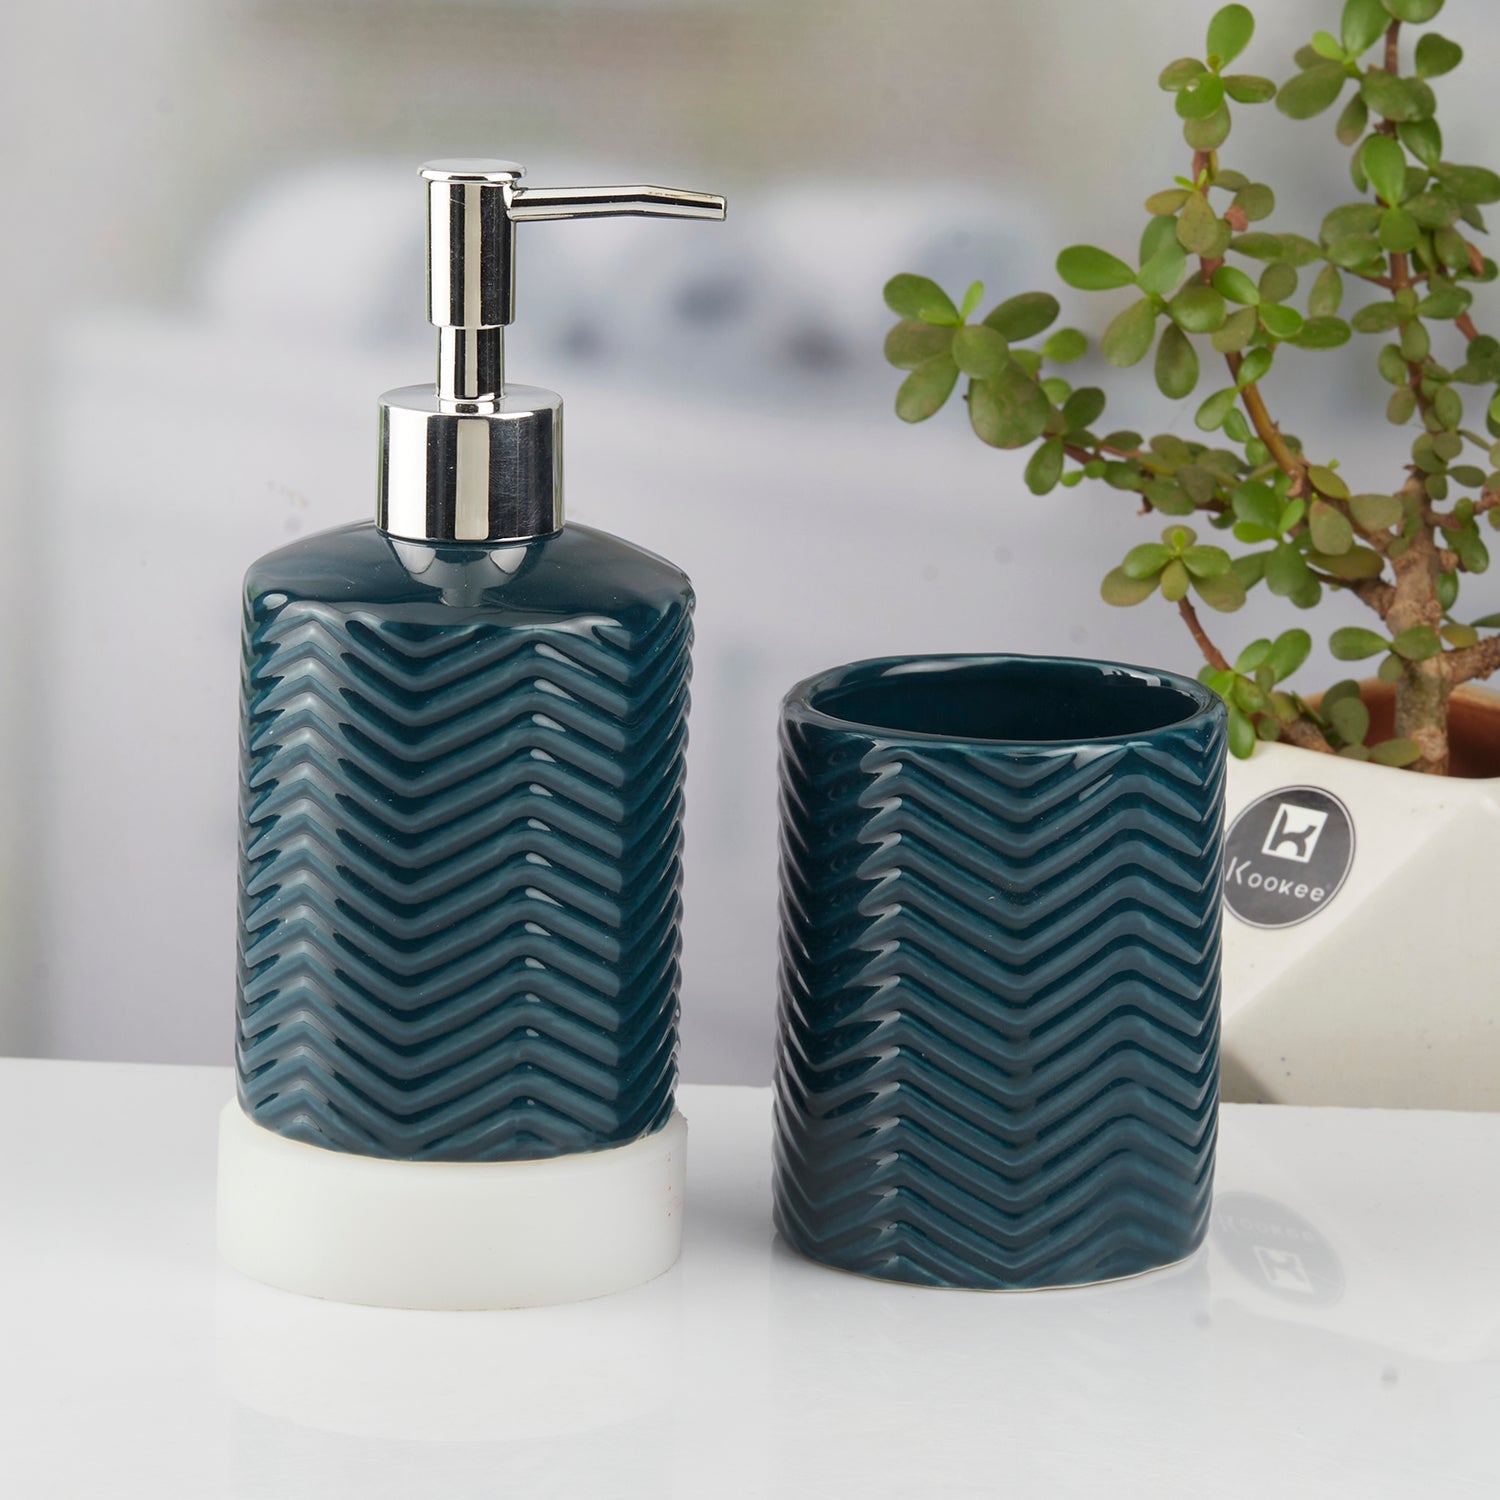 Ceramic Bathroom Accessories Set of 2 Bath Set with Soap Dispenser (9606)